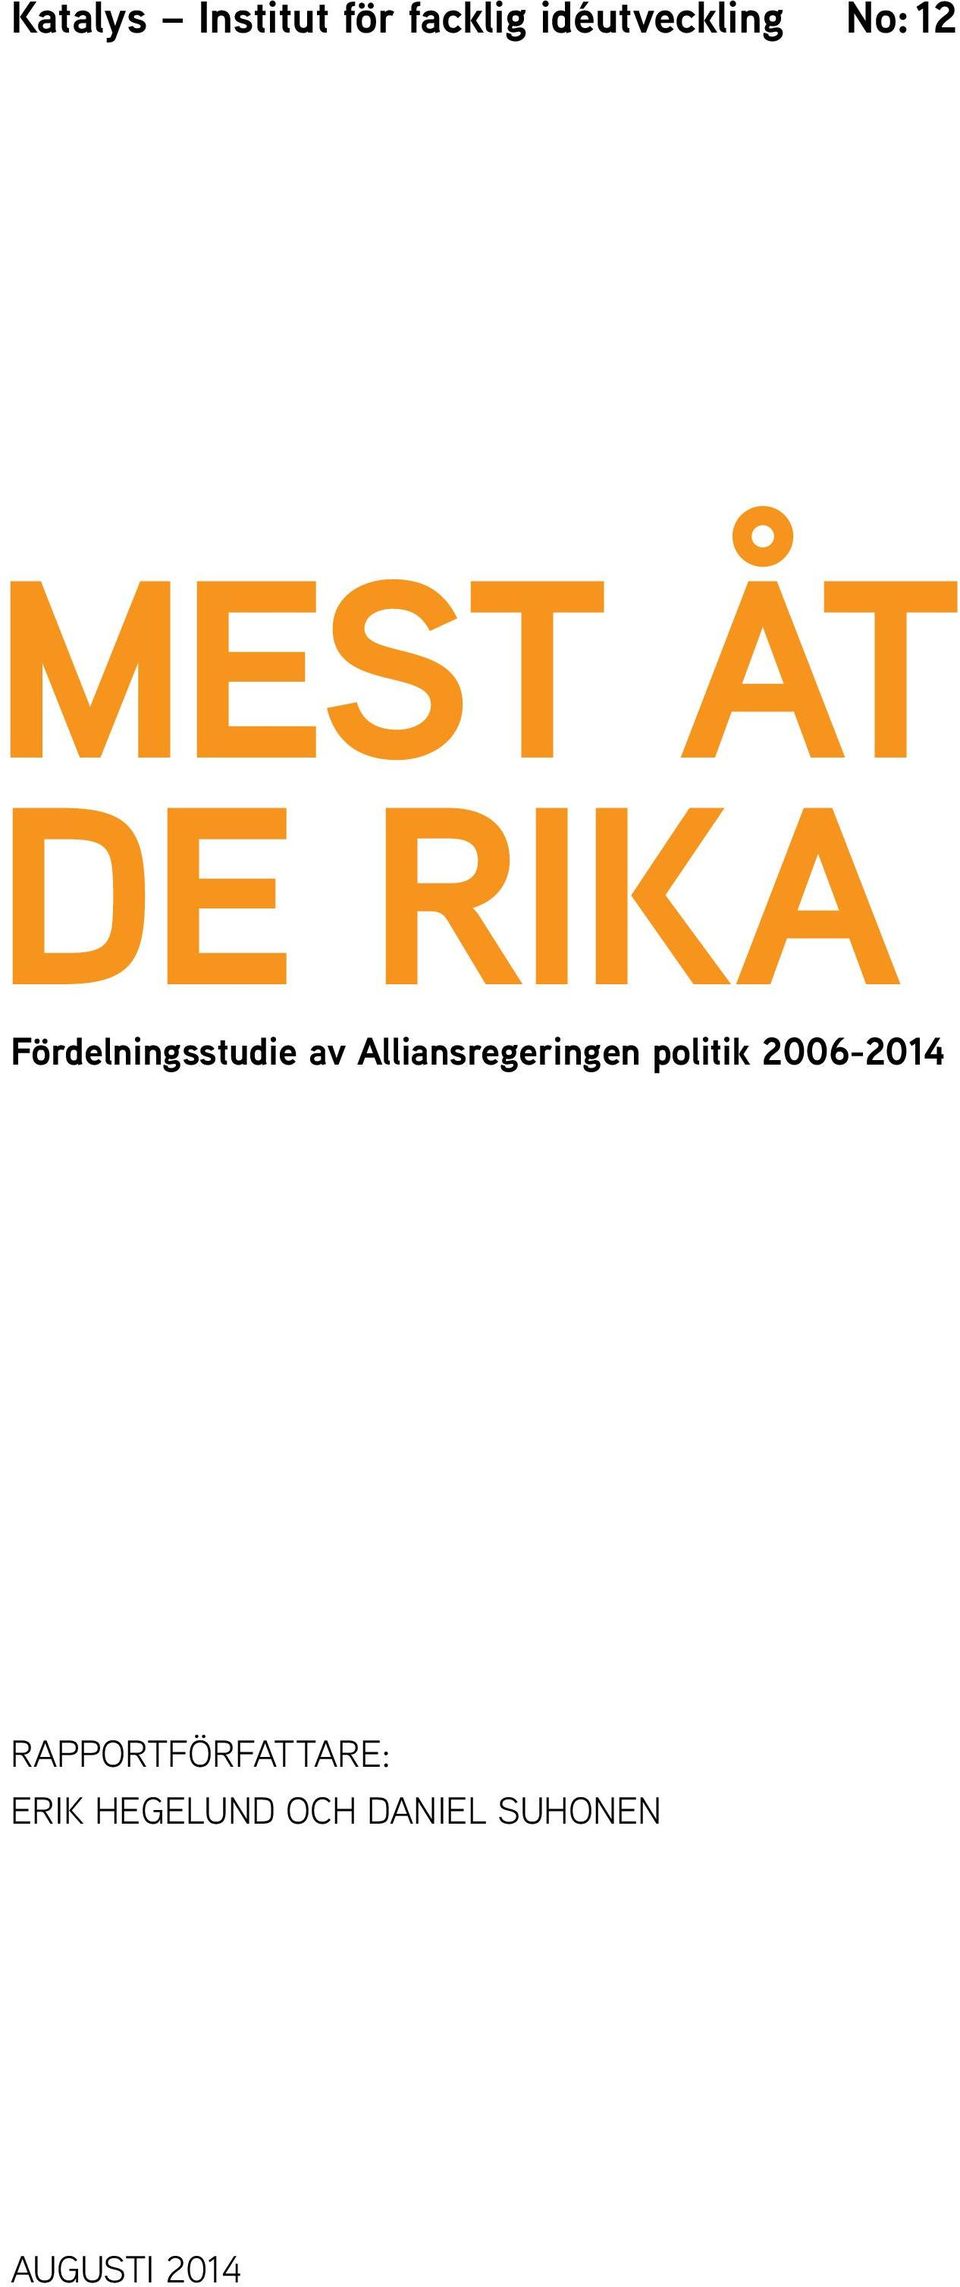 Alliansregeringen politik 2006-2014